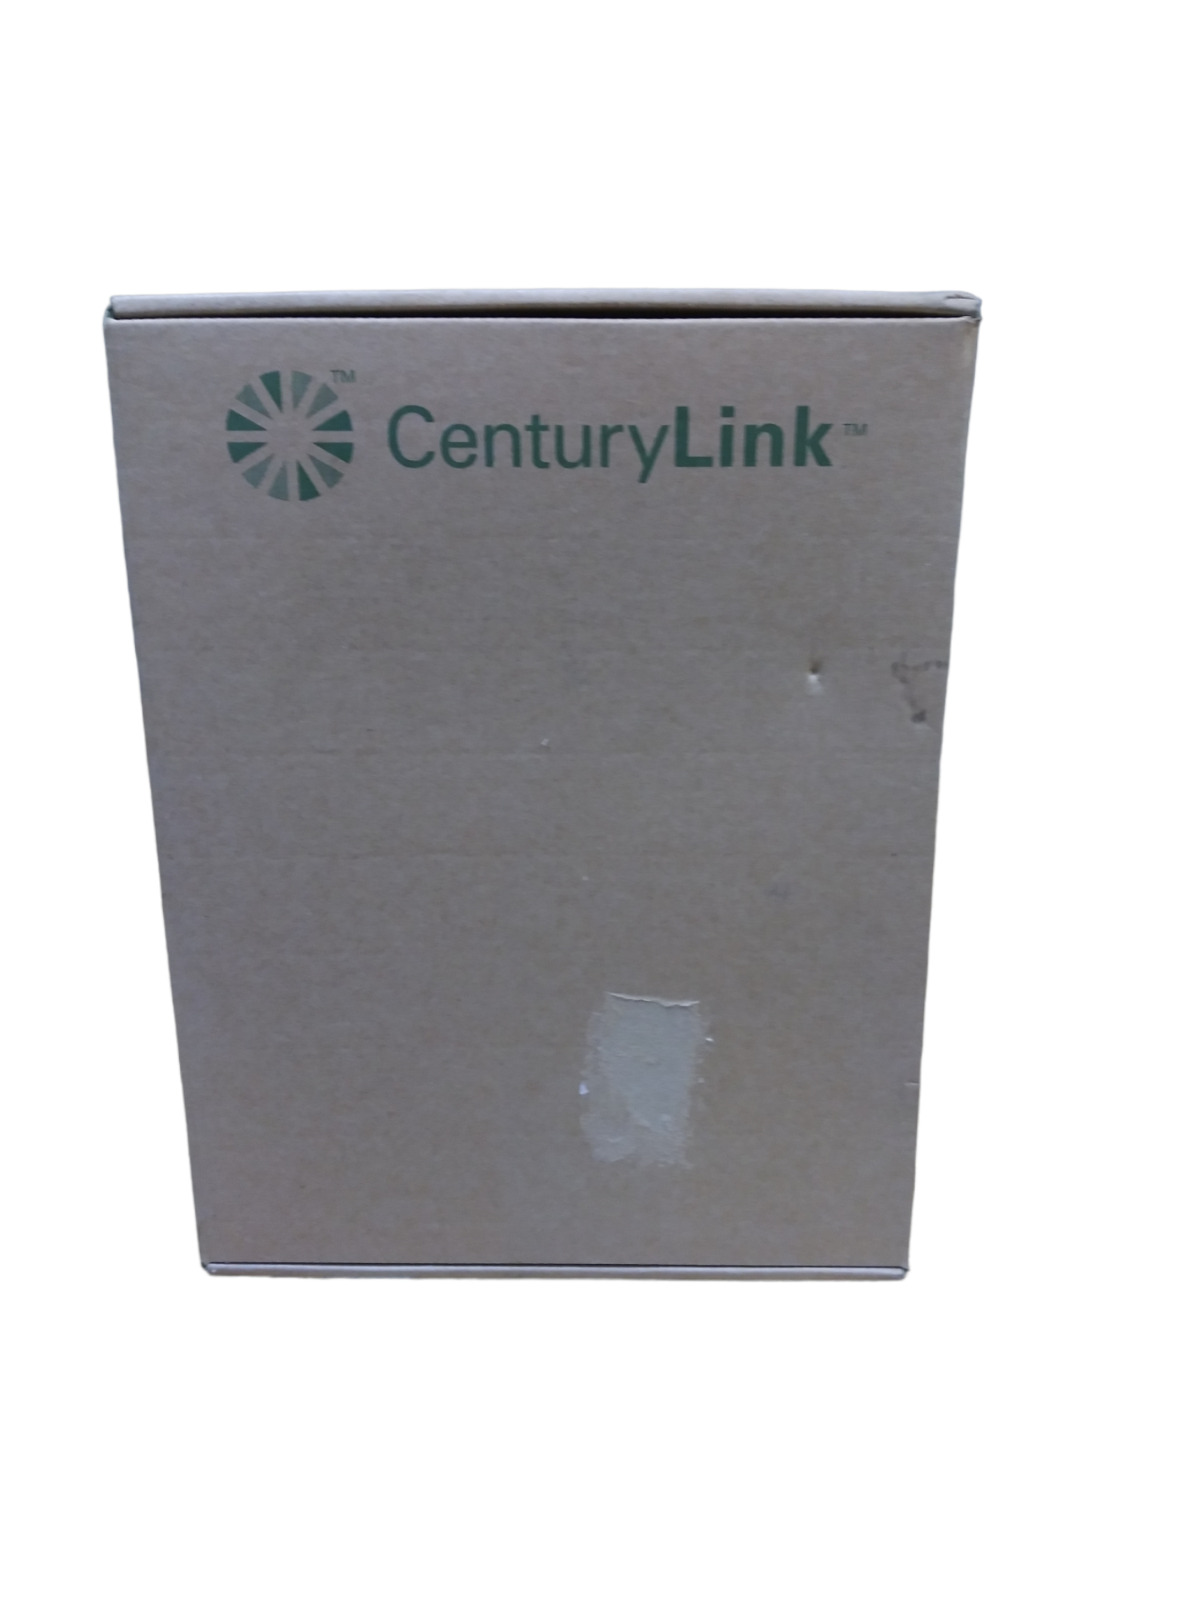 CenturyLink Zyxel C1000ZKR DSL Network router modem Sealed new